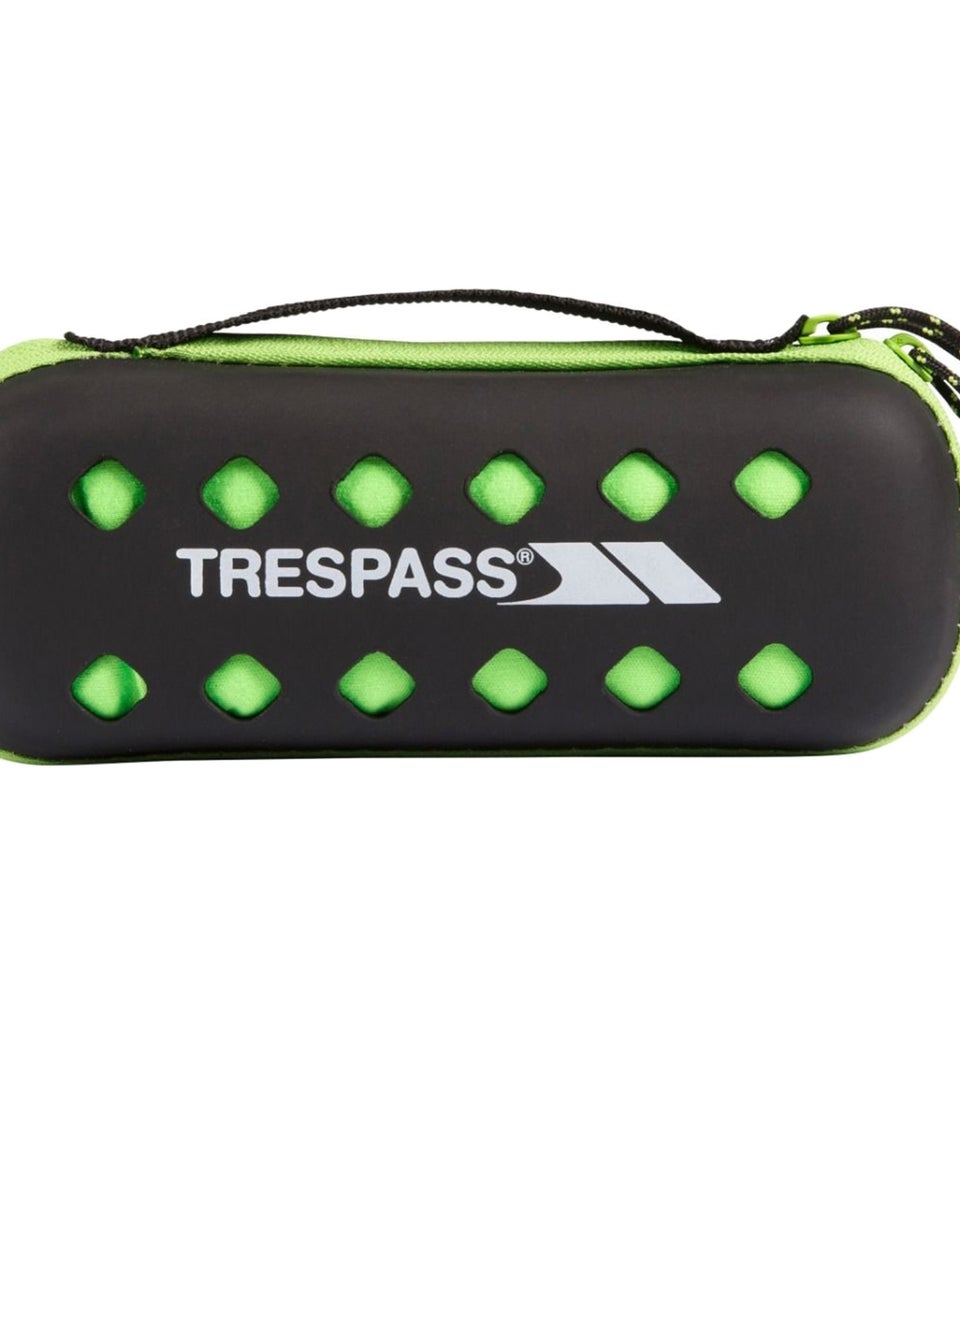 Trespass Green Compatto Dryfast Towel